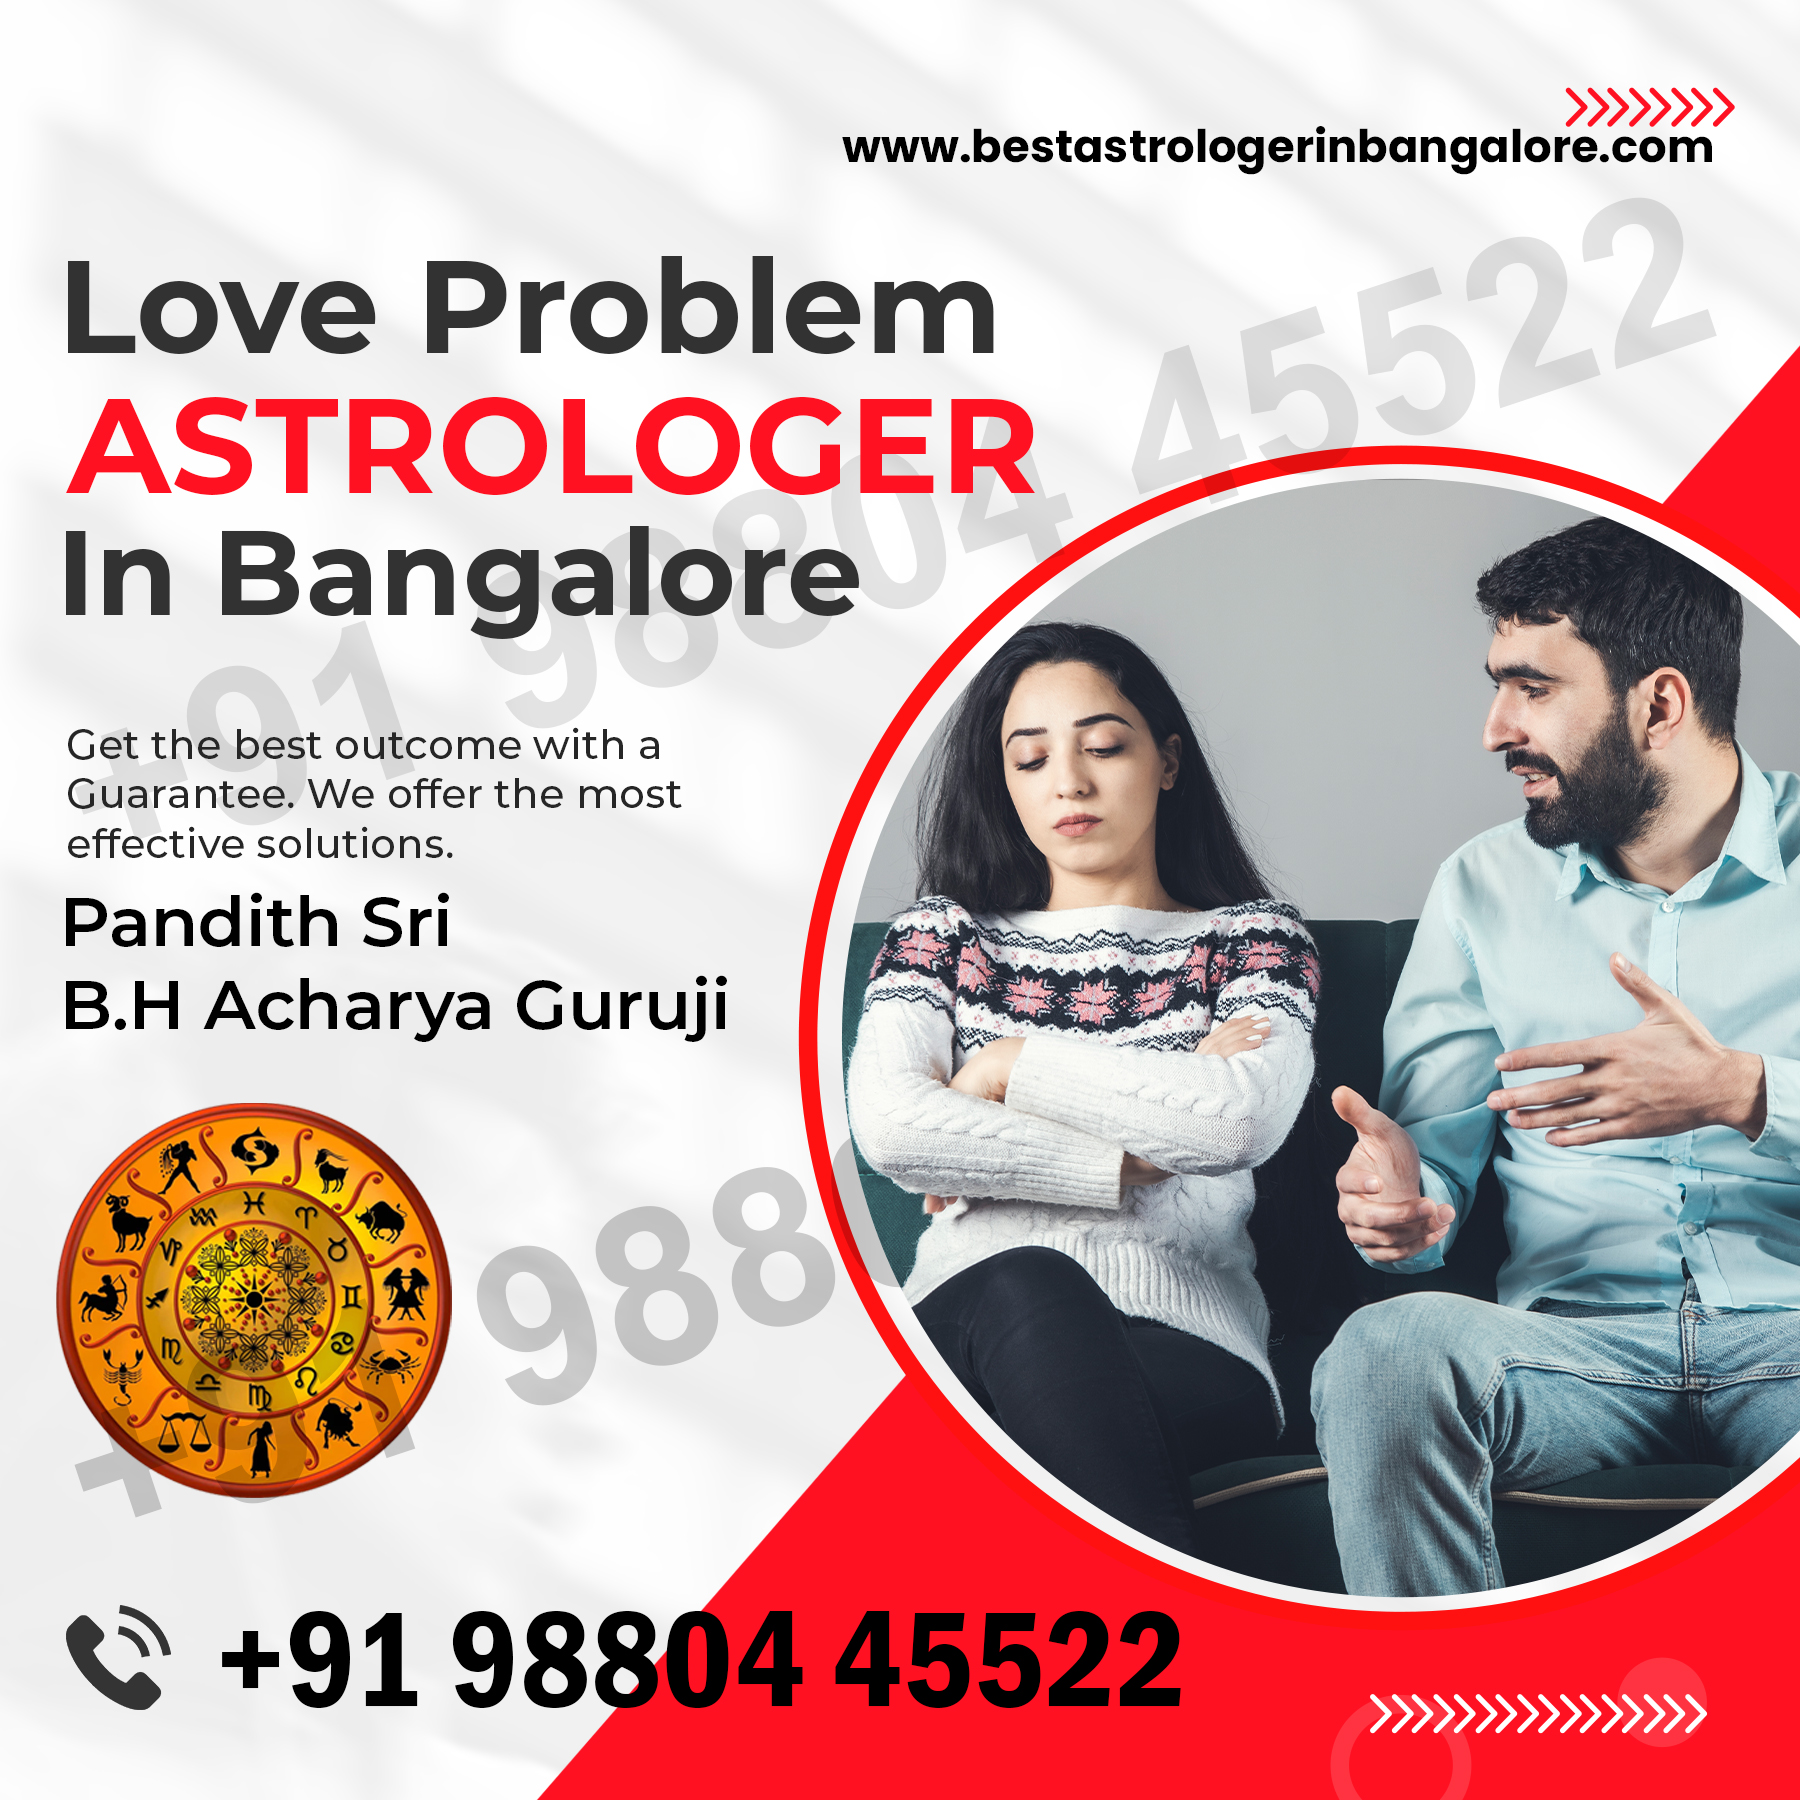 Love Problem Astrologer in Bangalore